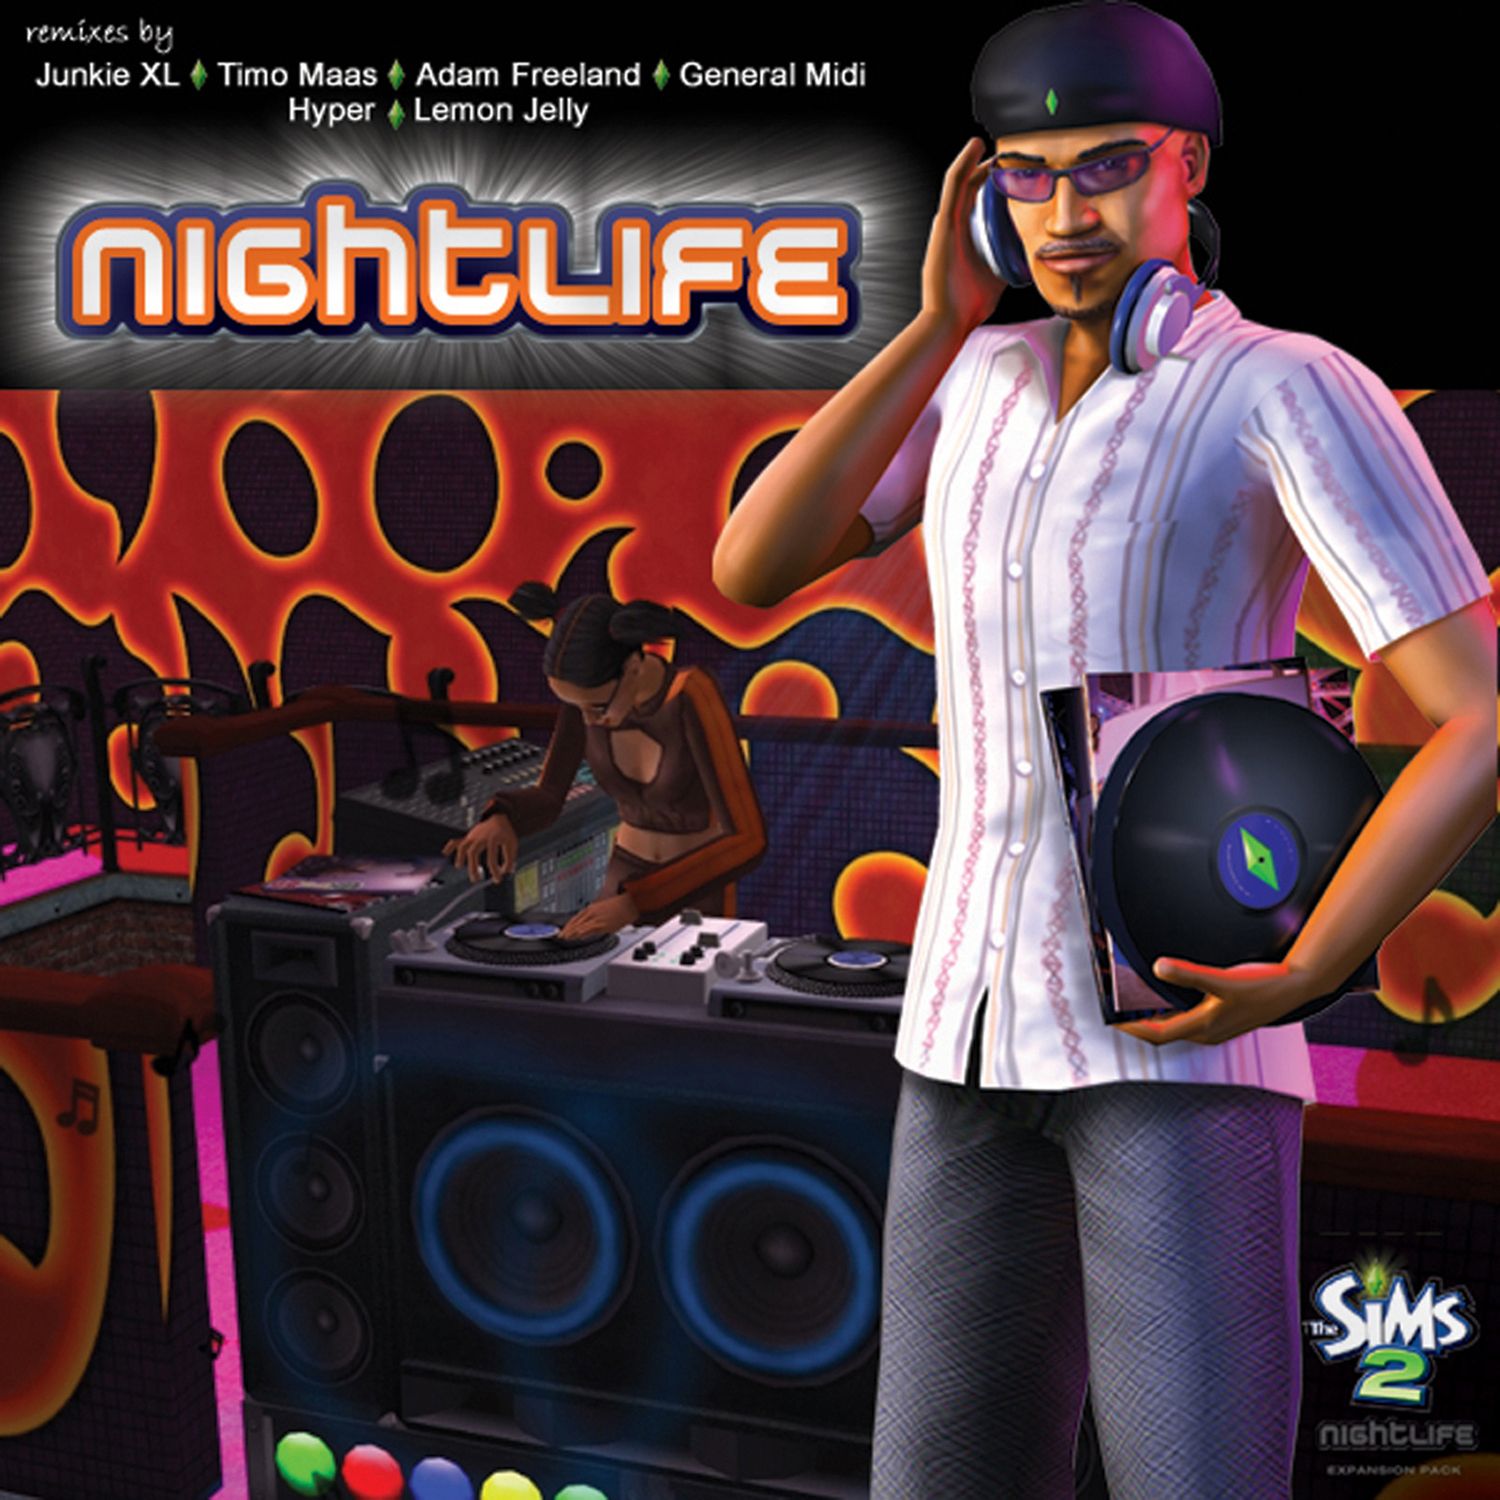 The Sims 2: Nightlife (Remixes) [Original Soundtrack]